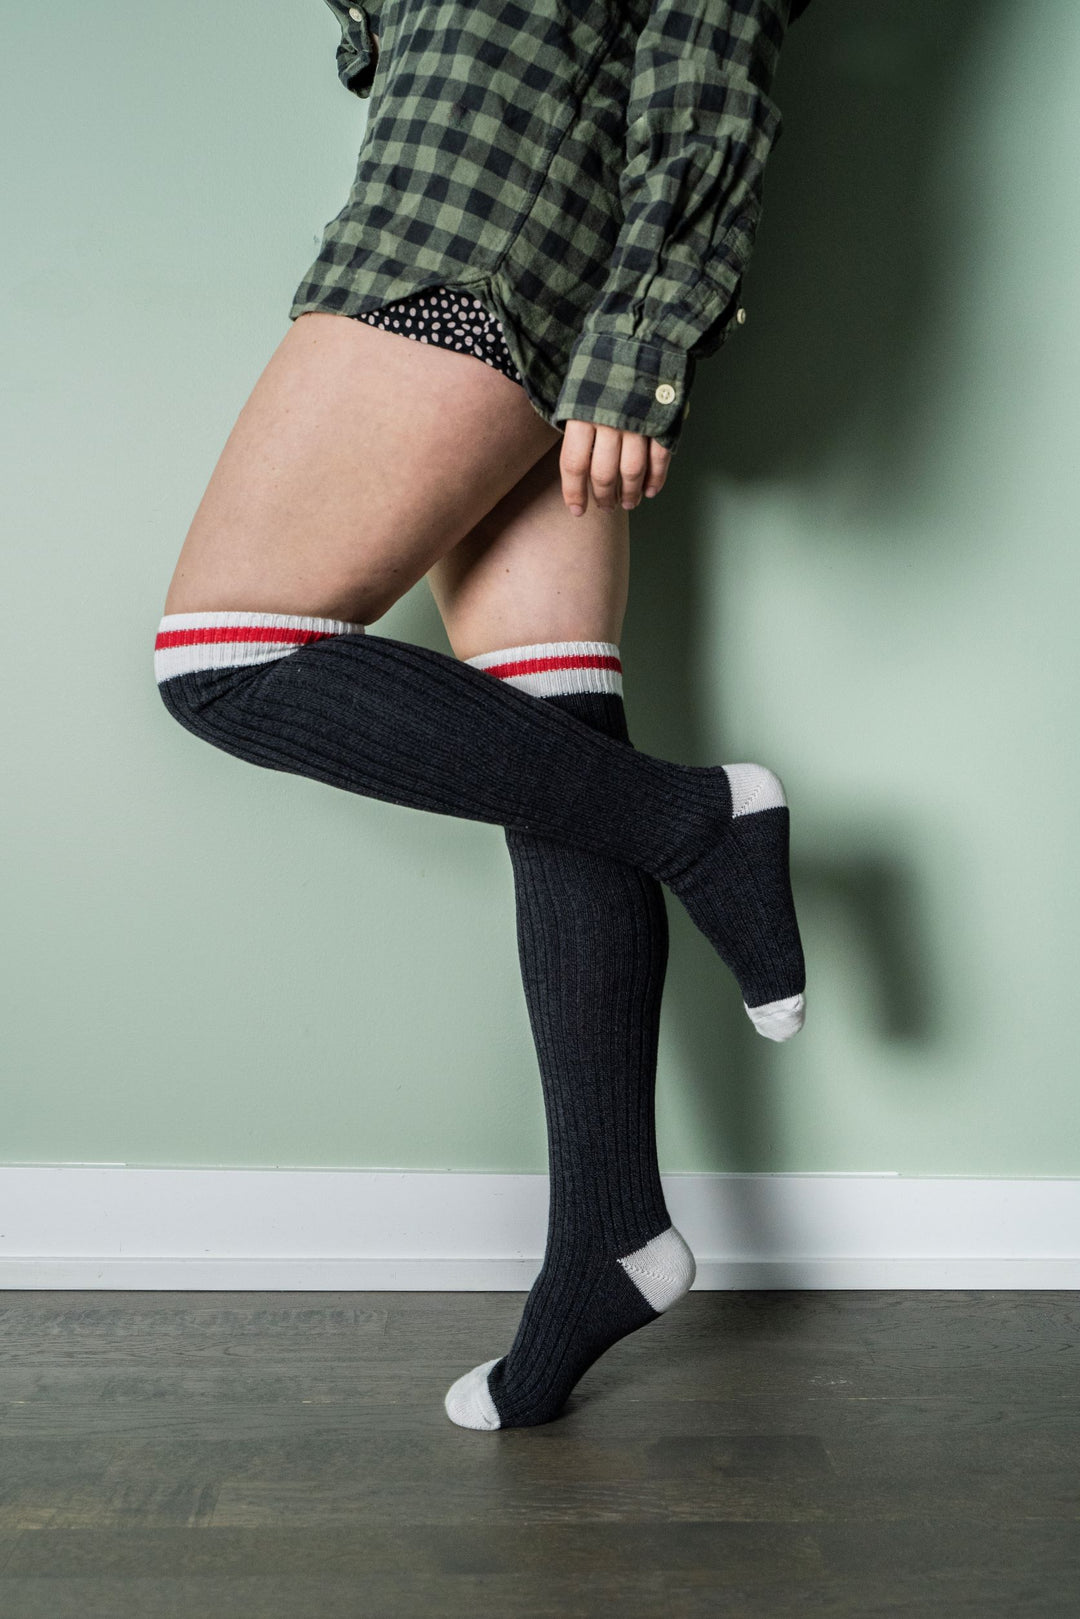 Long Socks Striped Thigh High Socks Cotton Over the Knee Socks Black and  White for Women. -  Canada